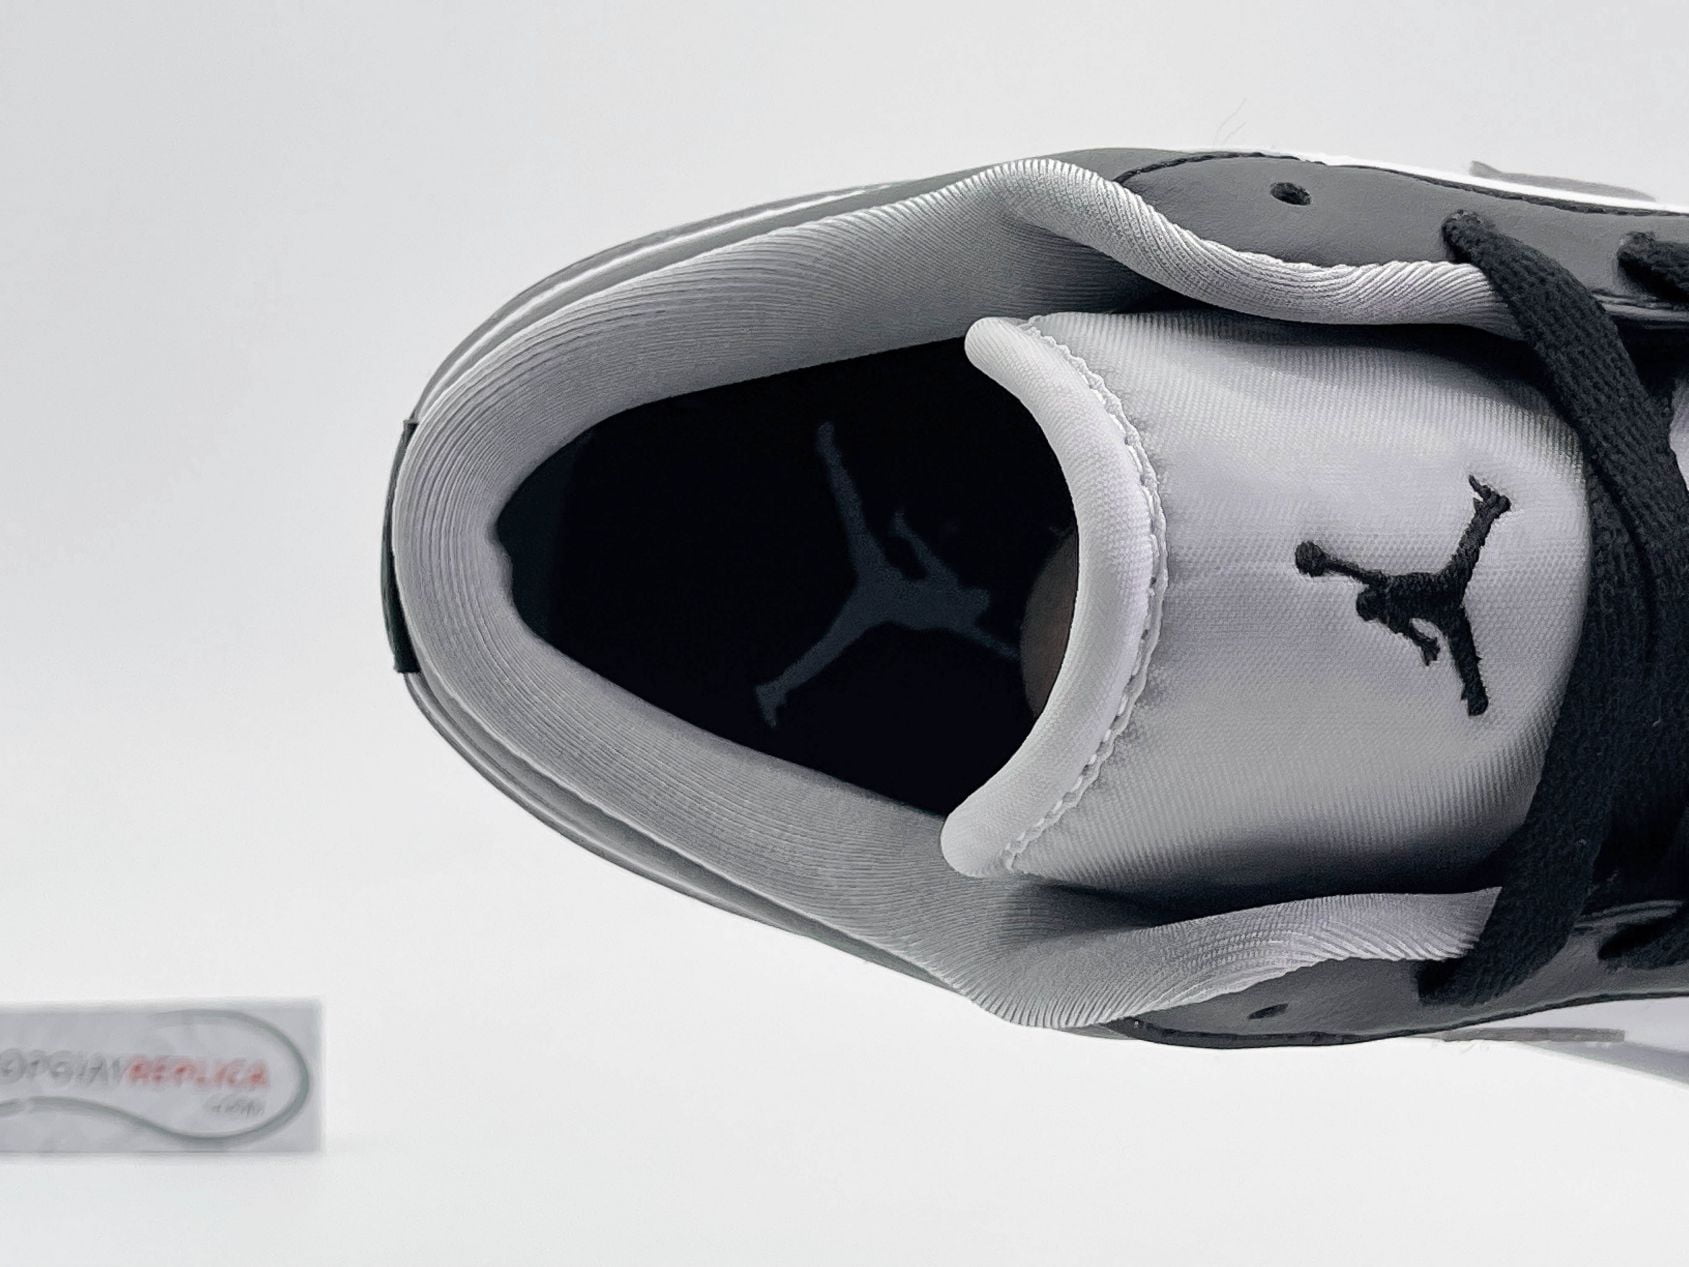 Giày Nike Air Jordan 1 Low Shadow Smoke Grey Rep 1 1